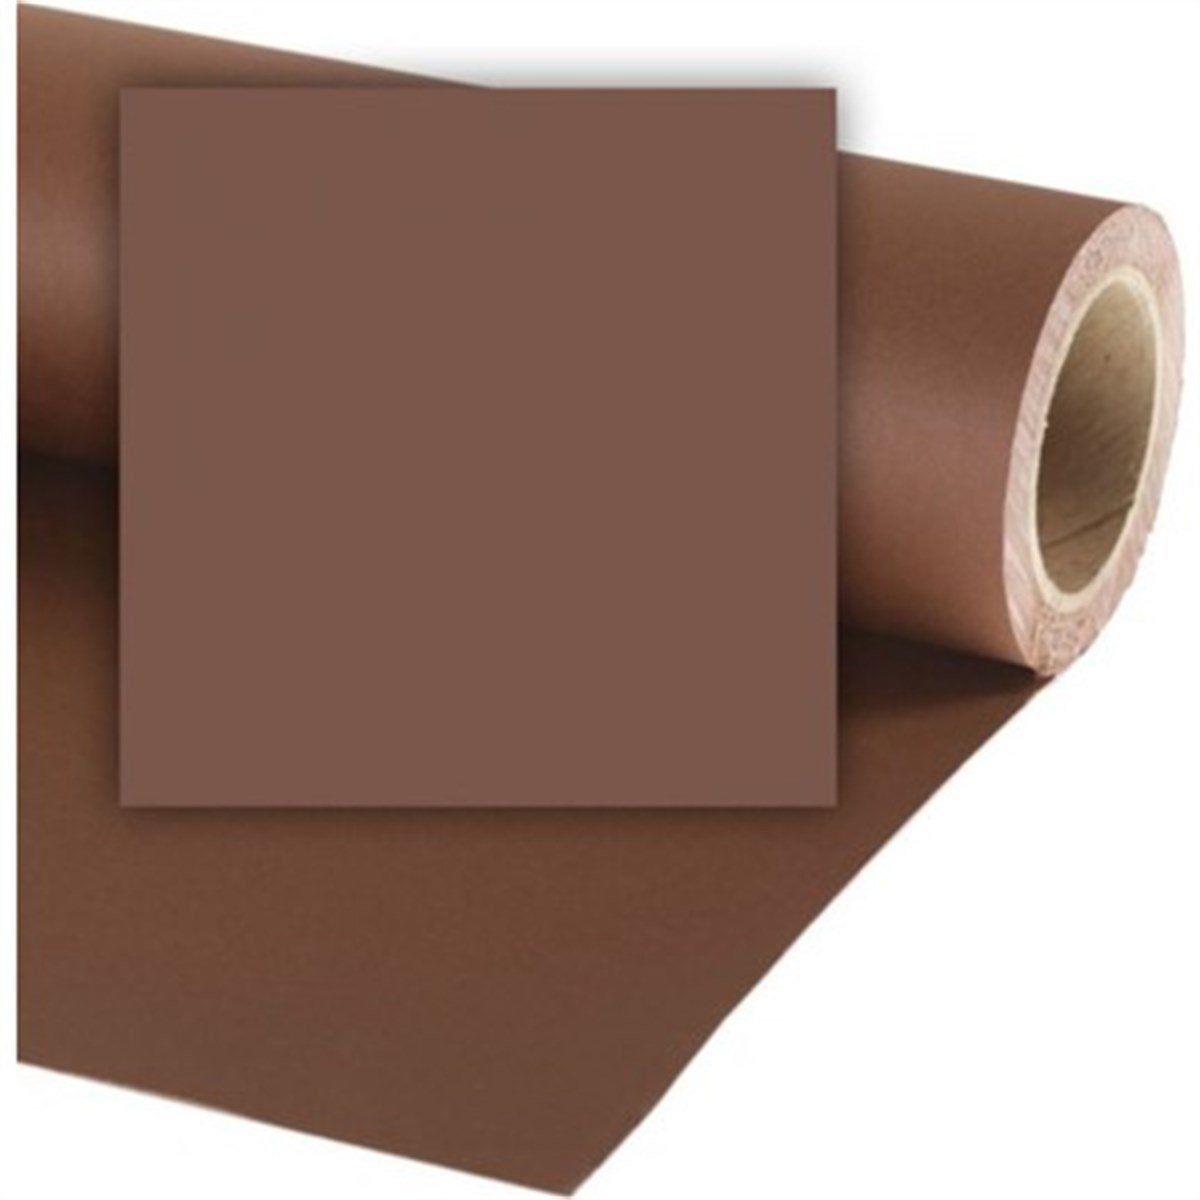 Colorama Peat Brown -80- Kağıt Fon